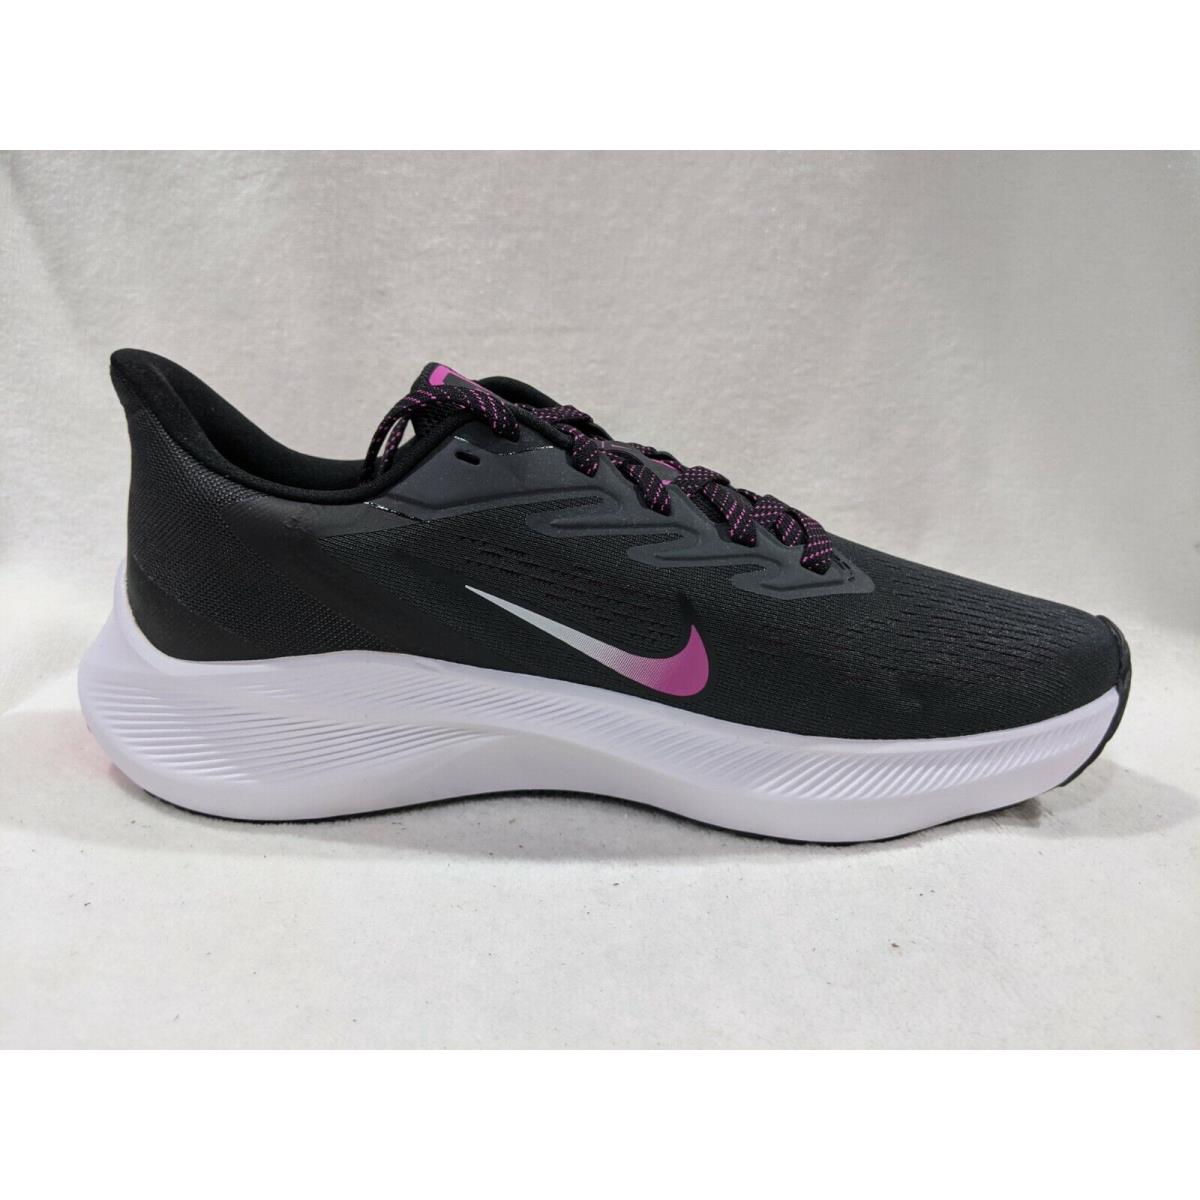 Nike shoes Zoom Winflo - Black , Grey , Pink 7